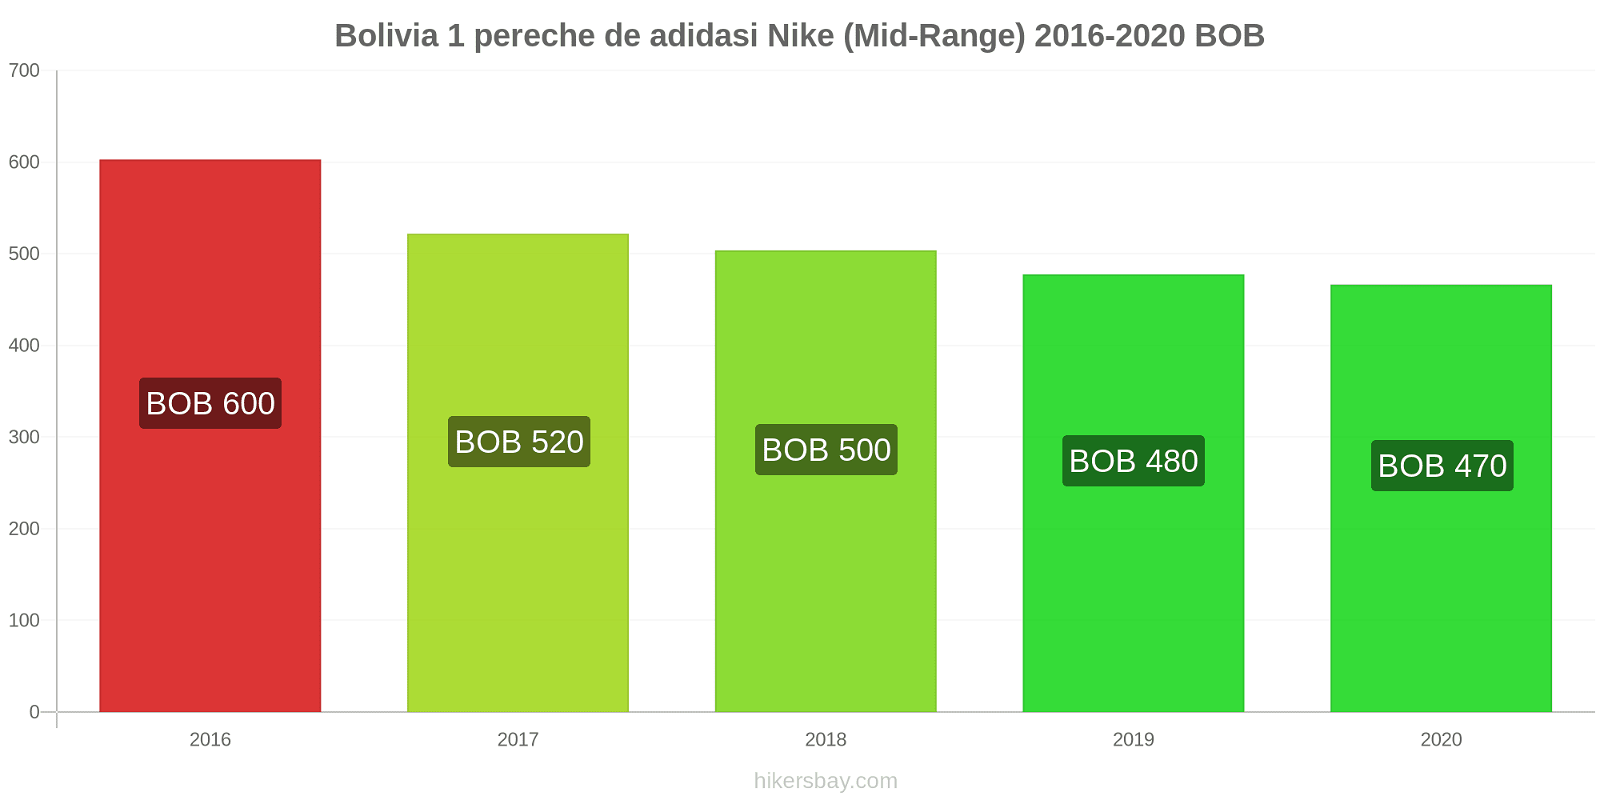 Bolivia modificări de preț 1 pereche de adidasi Nike (Mid-Range) hikersbay.com